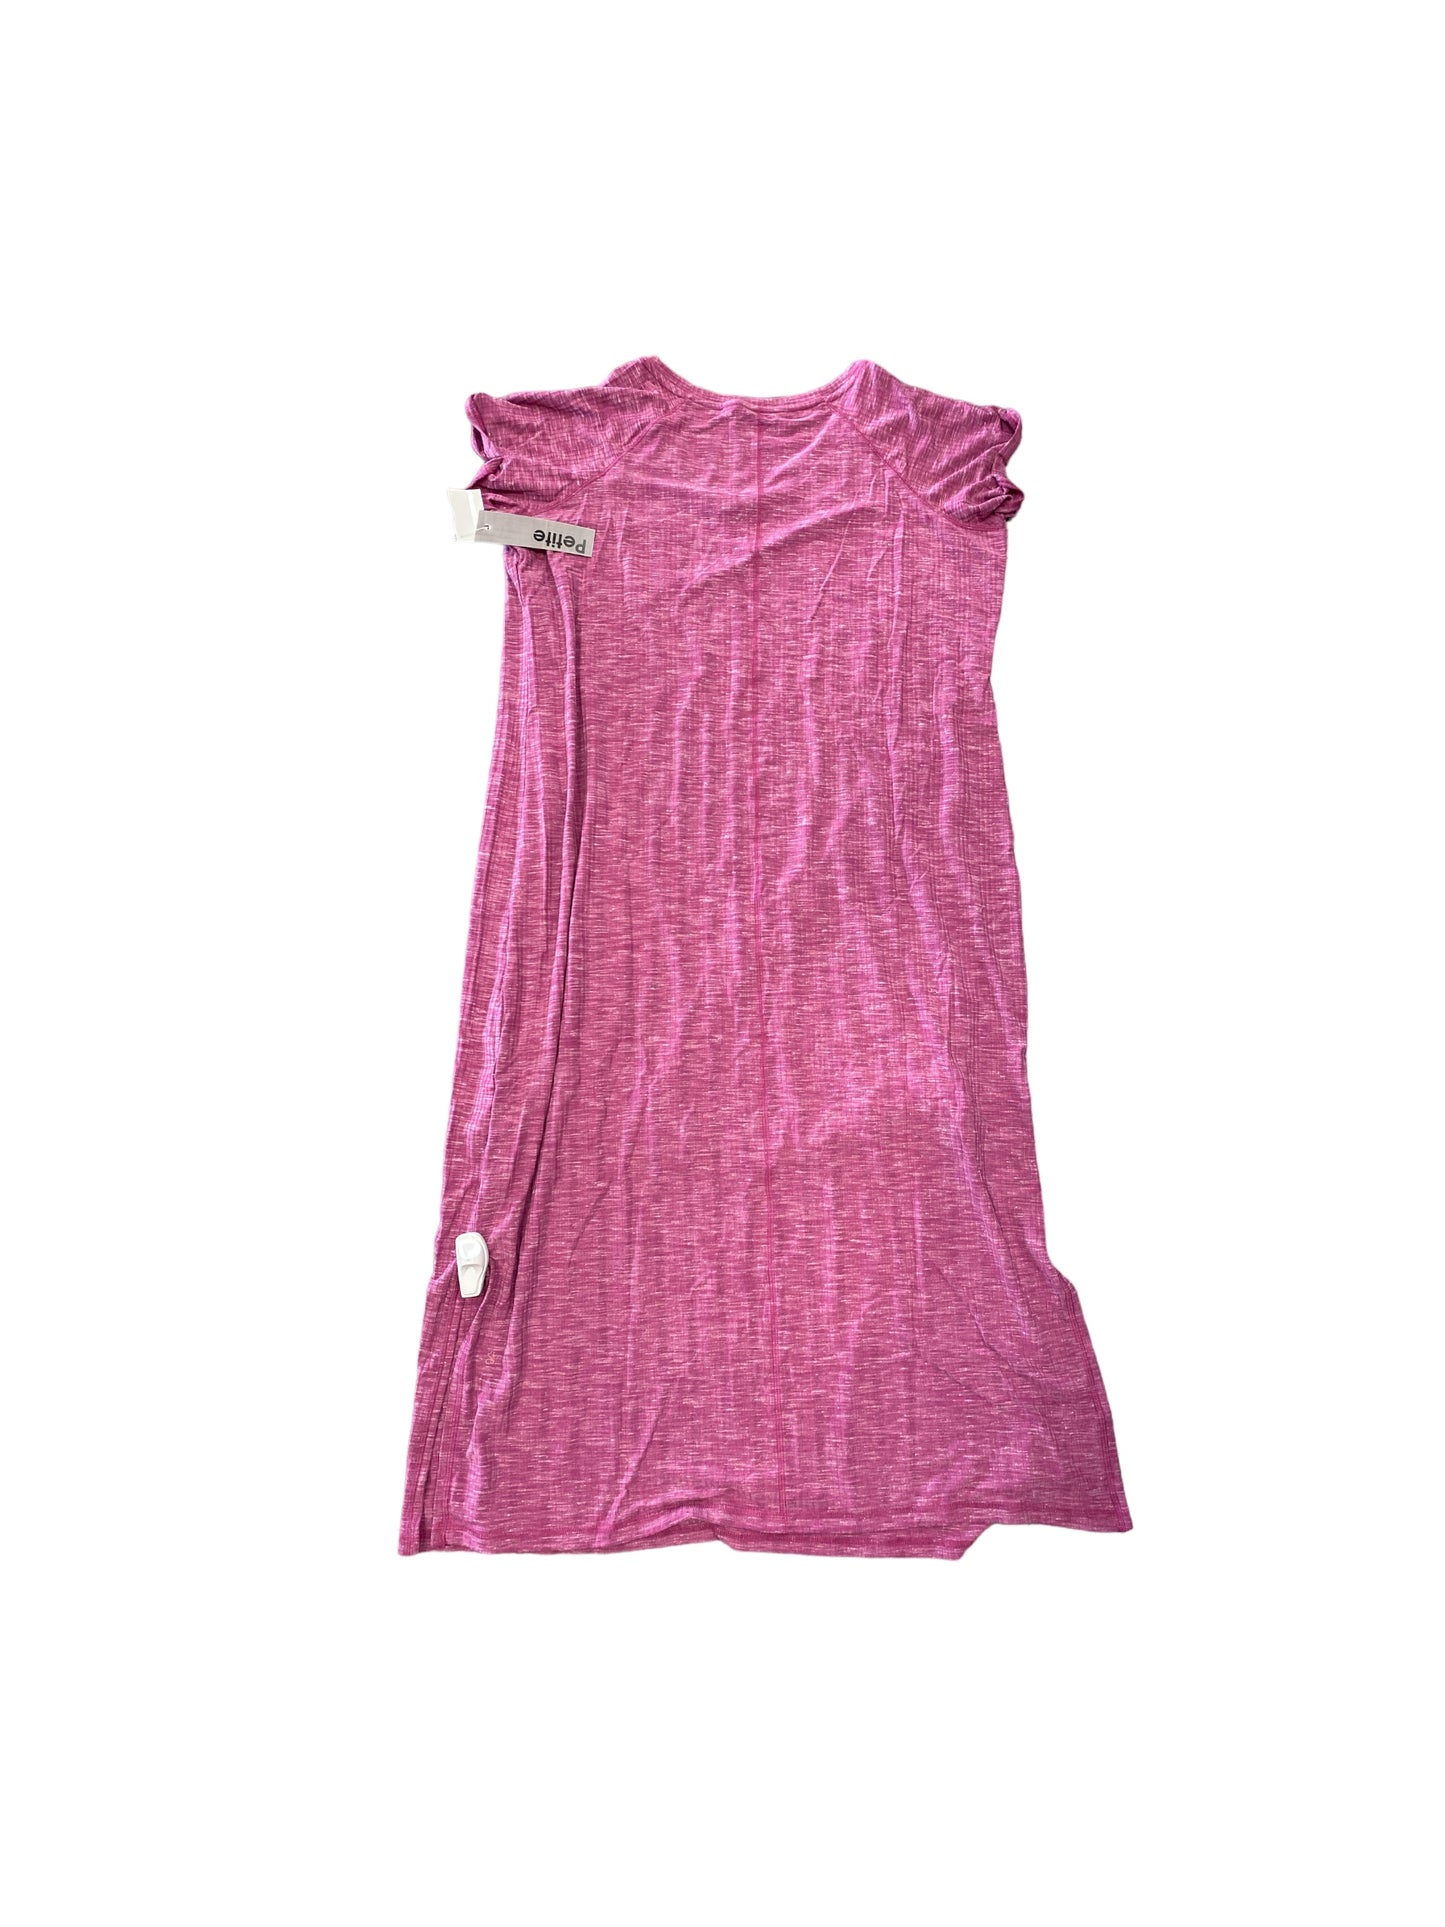 Dress Casual Maxi By Isaac Mizrahi Live Qvc  Size: Petite Large